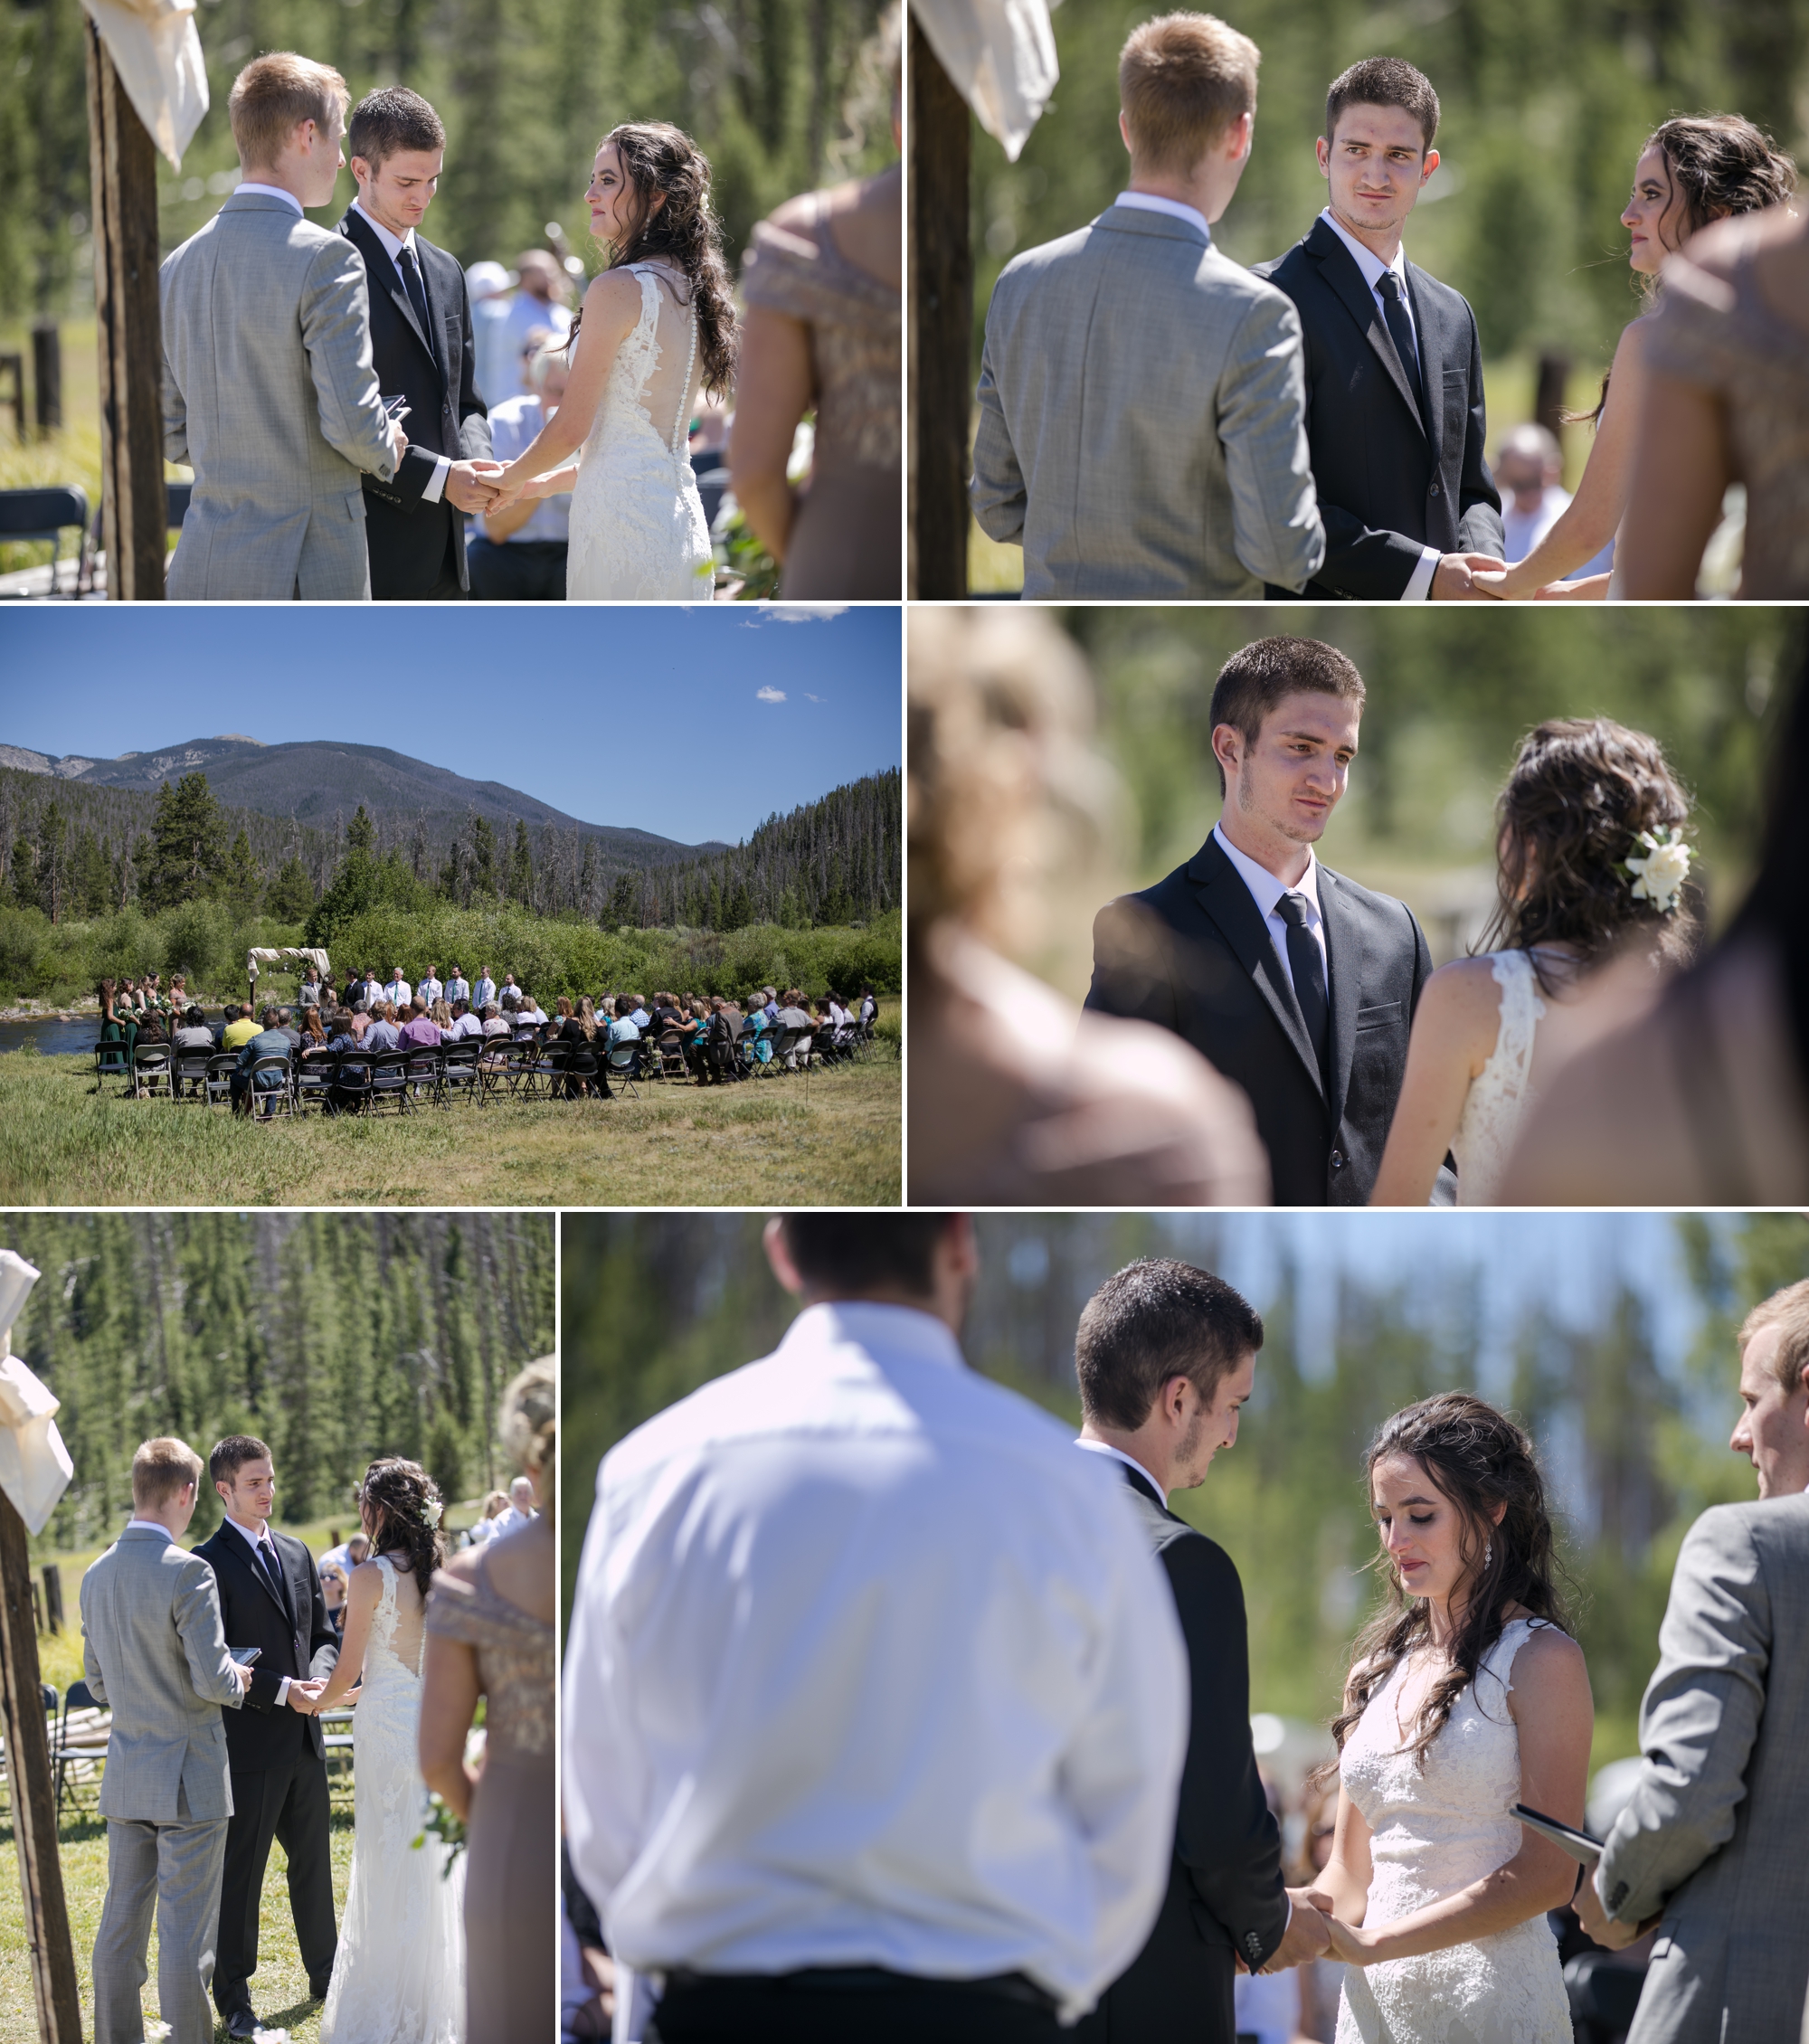 Grand Lake wedding ceremony in Colorado